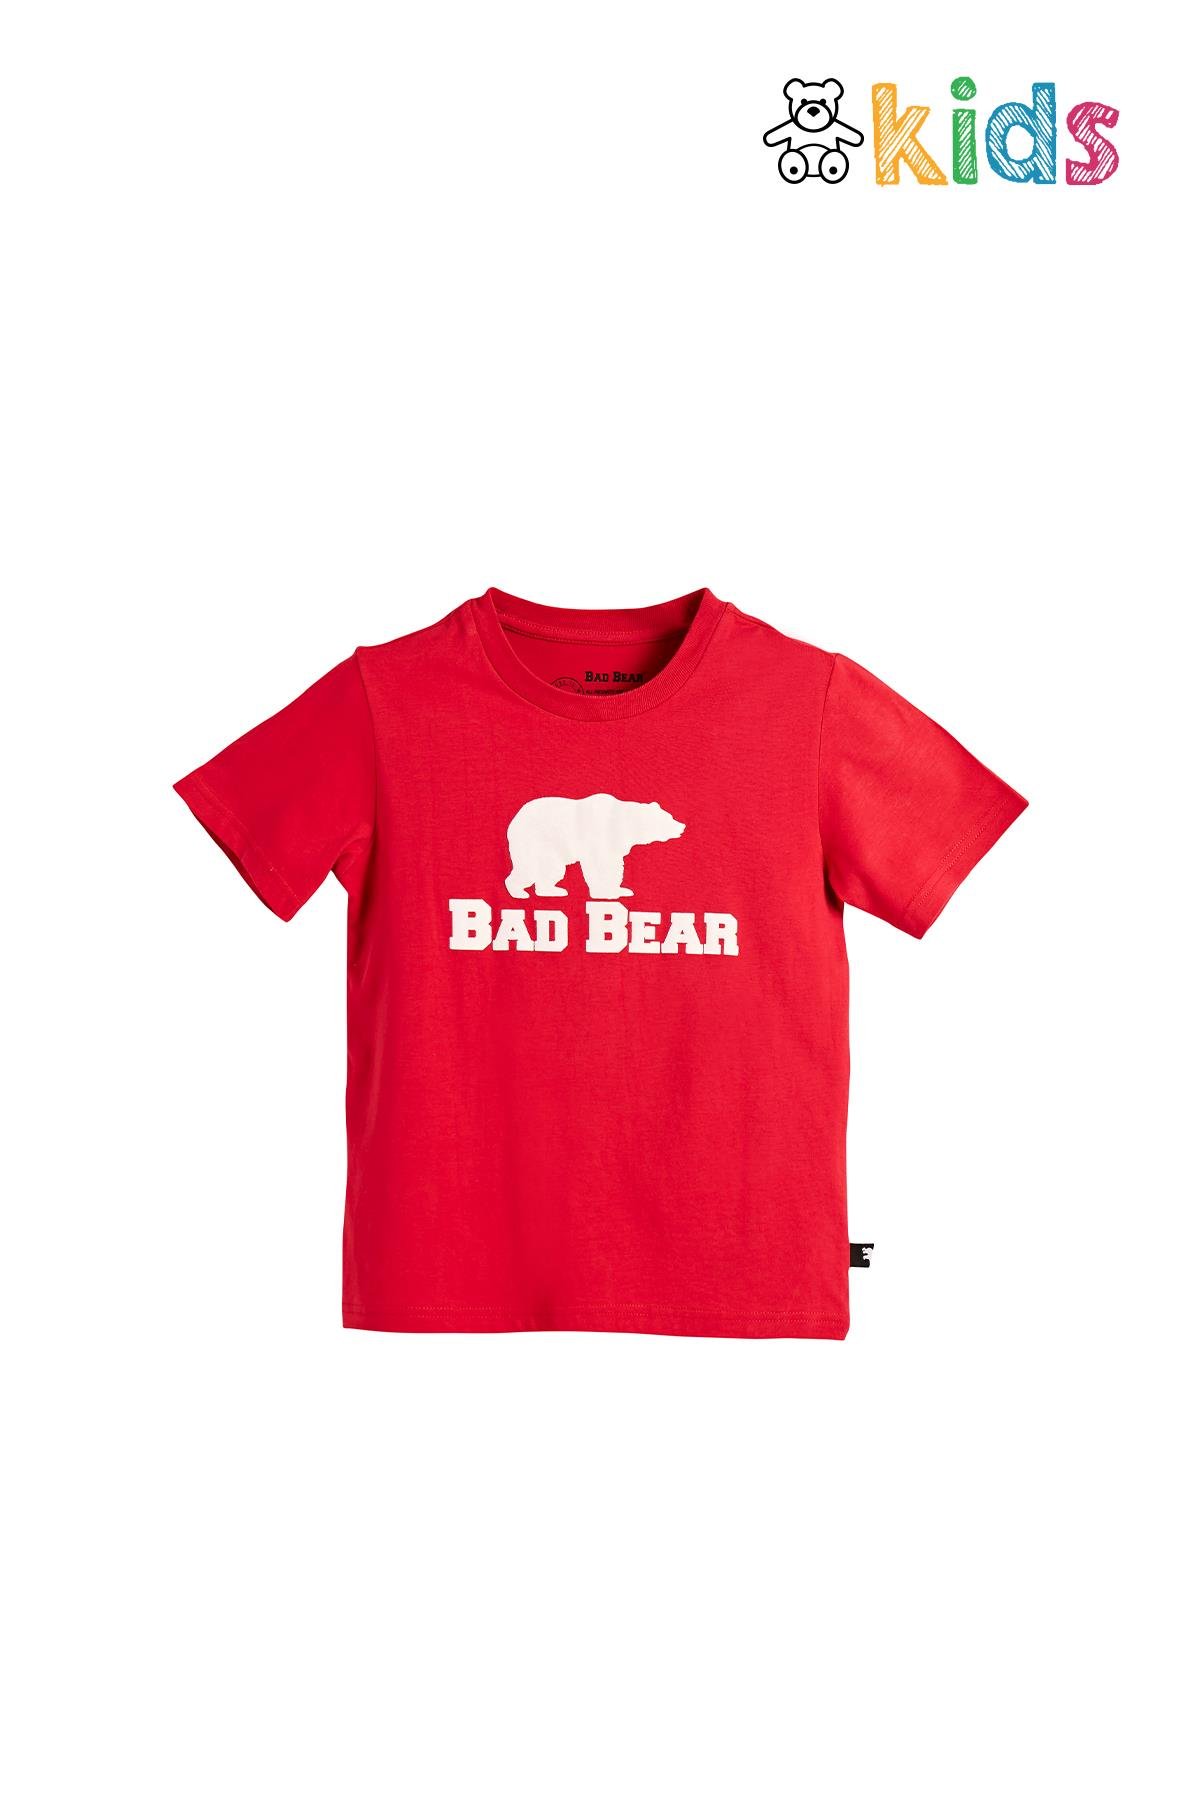 BAD BEAR T-SHIRT JR PARLAK KIRMIZI |BAD BEAR